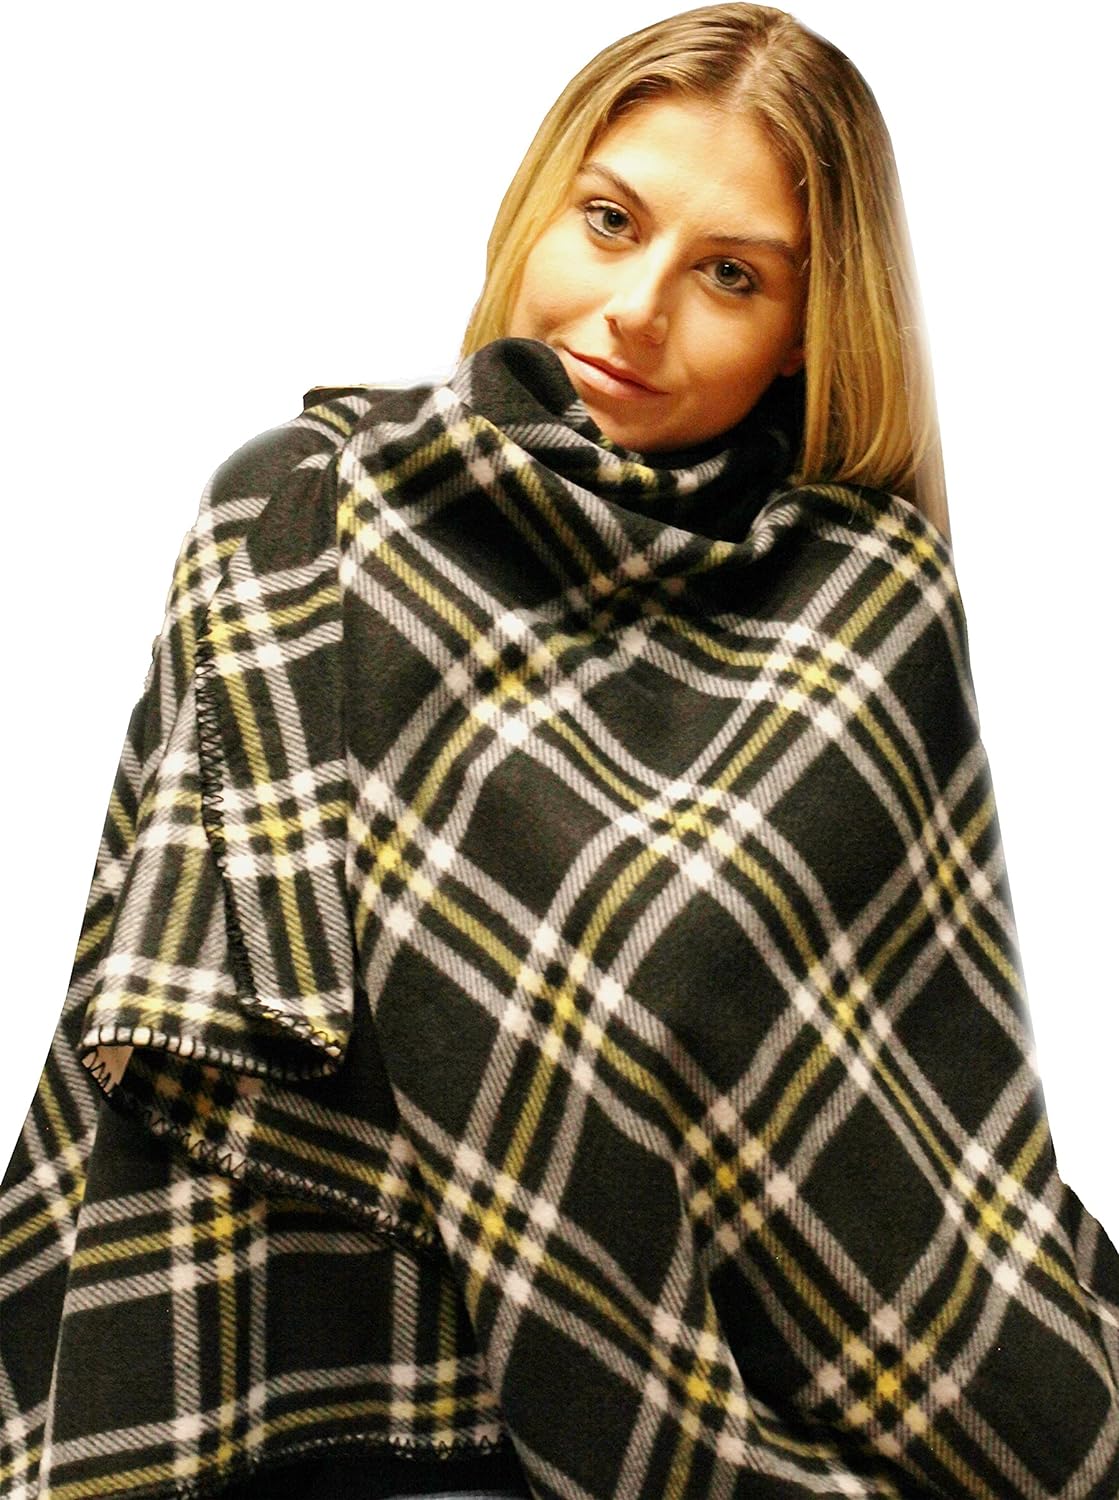 Yacht & Smith Bulk Soft Fleece Blankets 50 X 60, Cozy Warm Throw Blanket Sofa Travel Outdoor, Wholesale (50 X 60, 12 Pack Black Plaid)